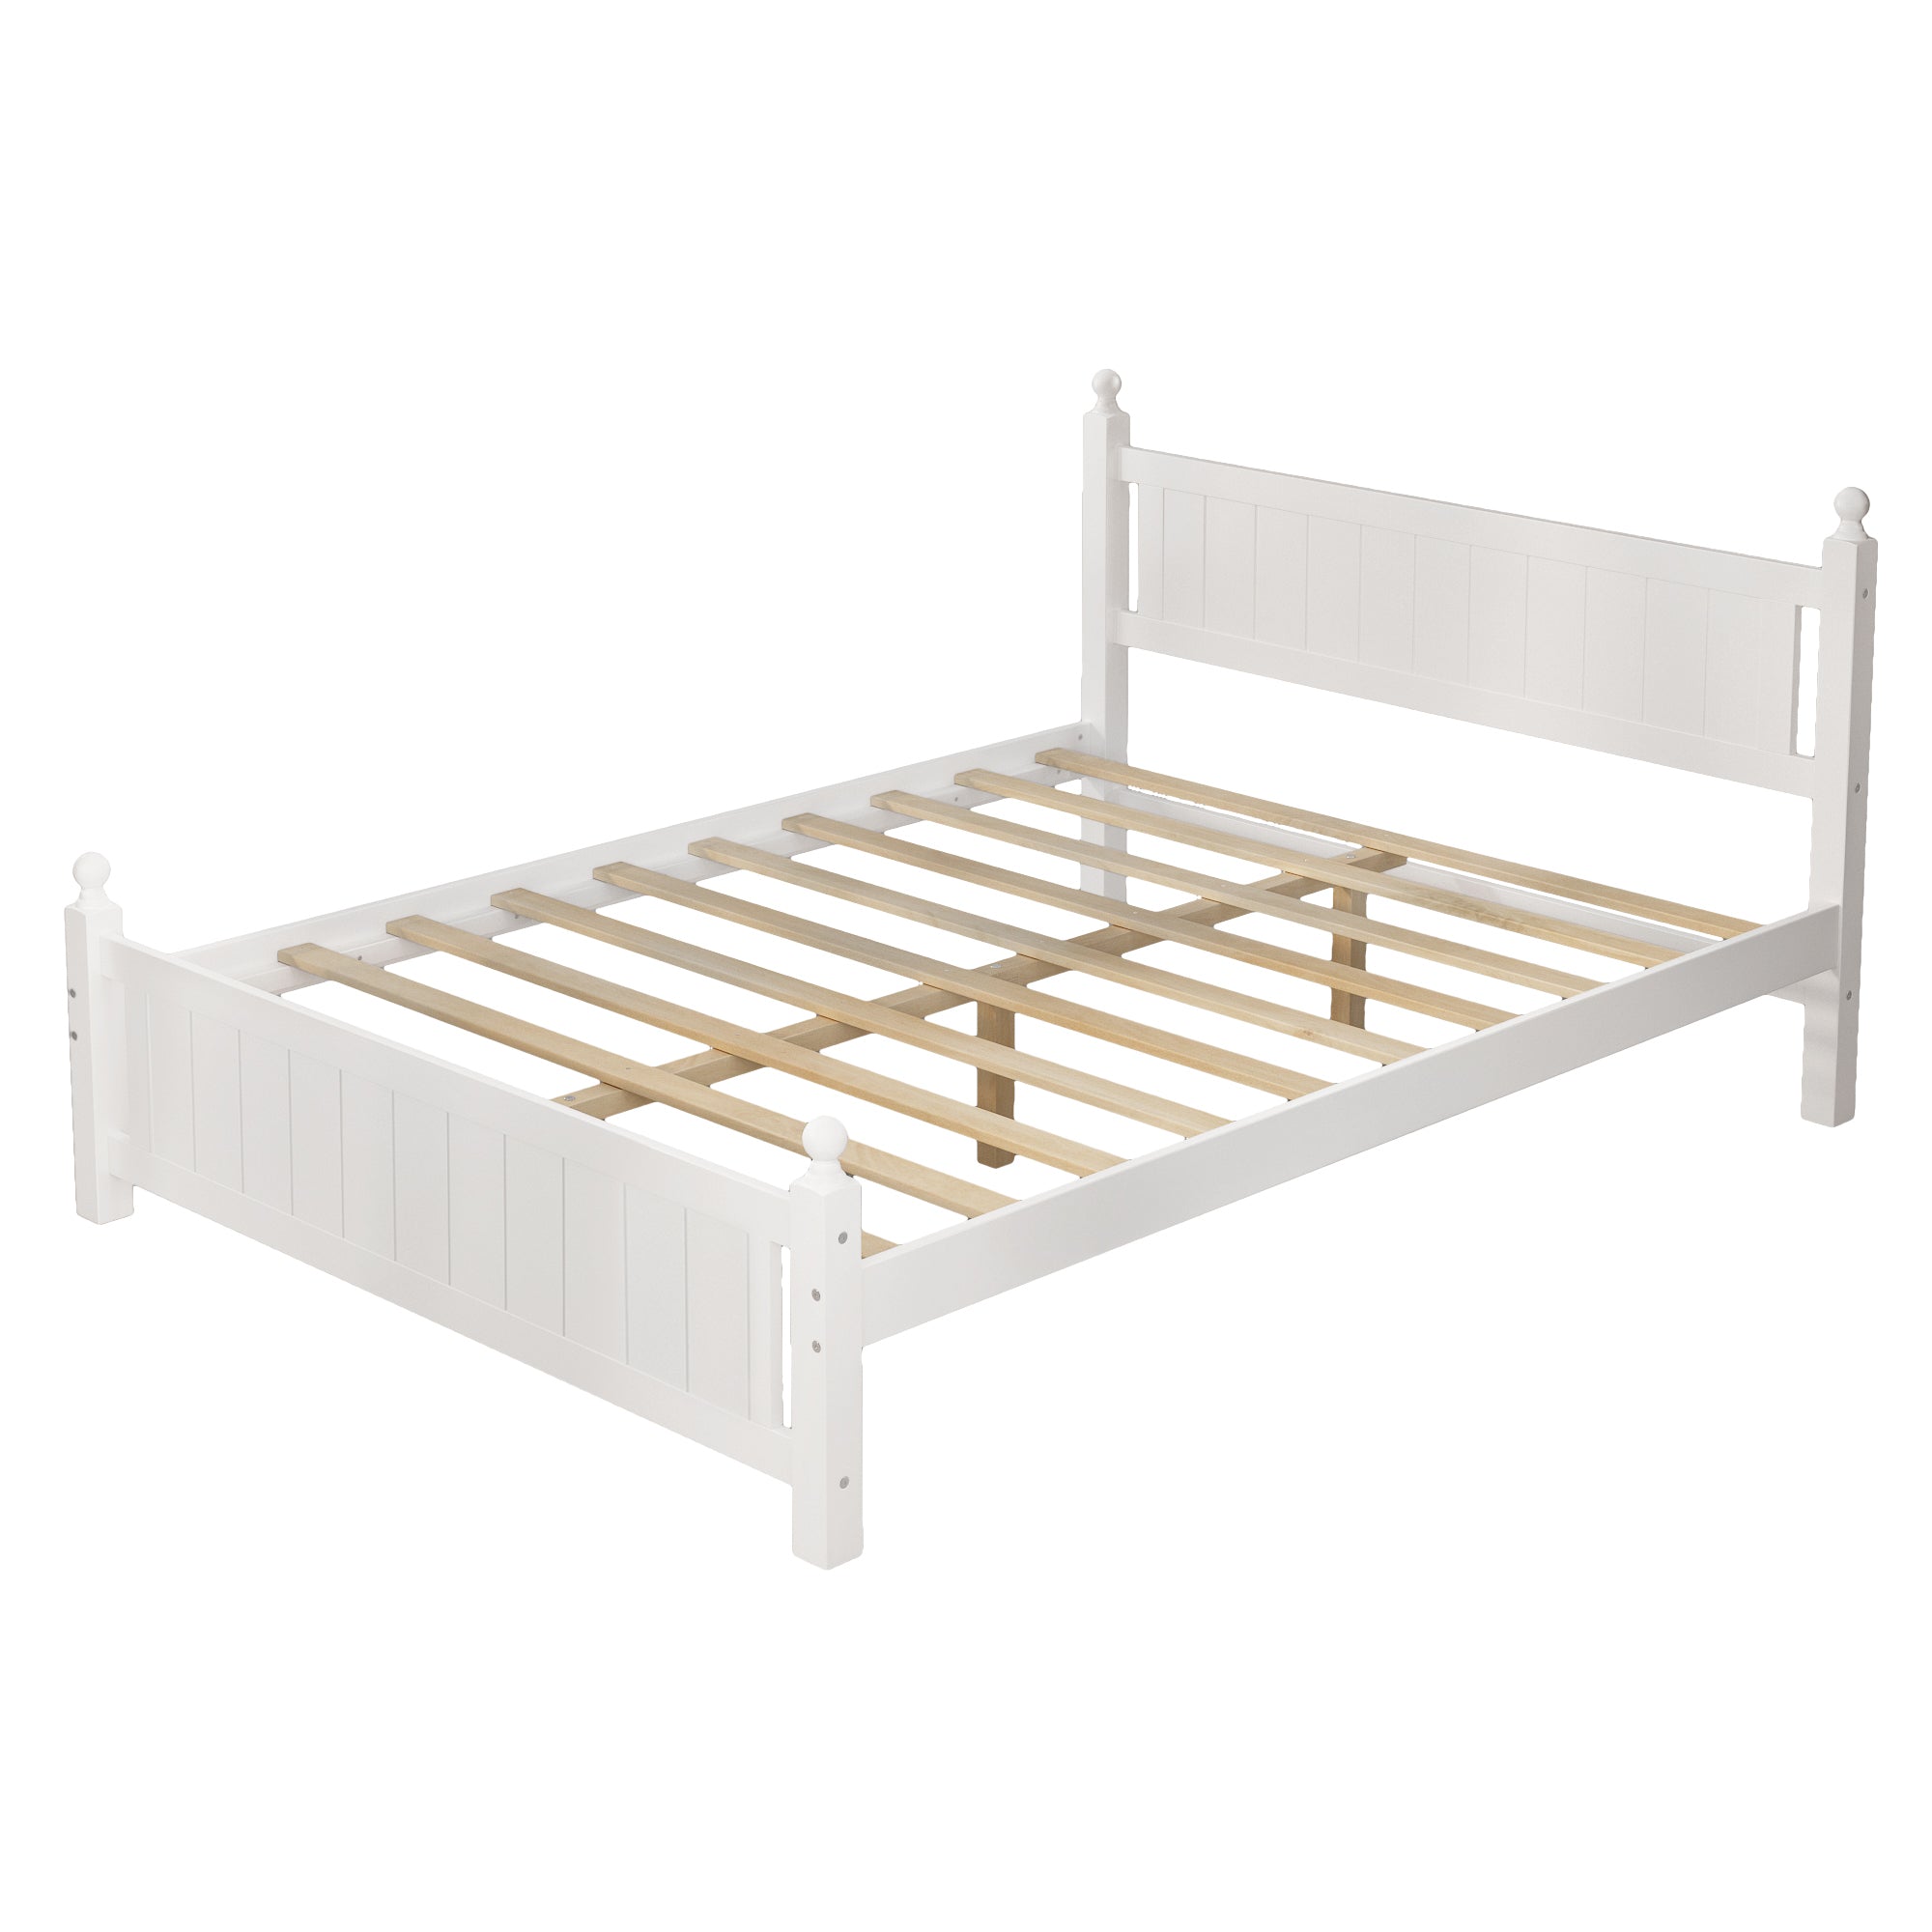 Queen Size Solid Wood Platform Bed Frame for Kids box spring not